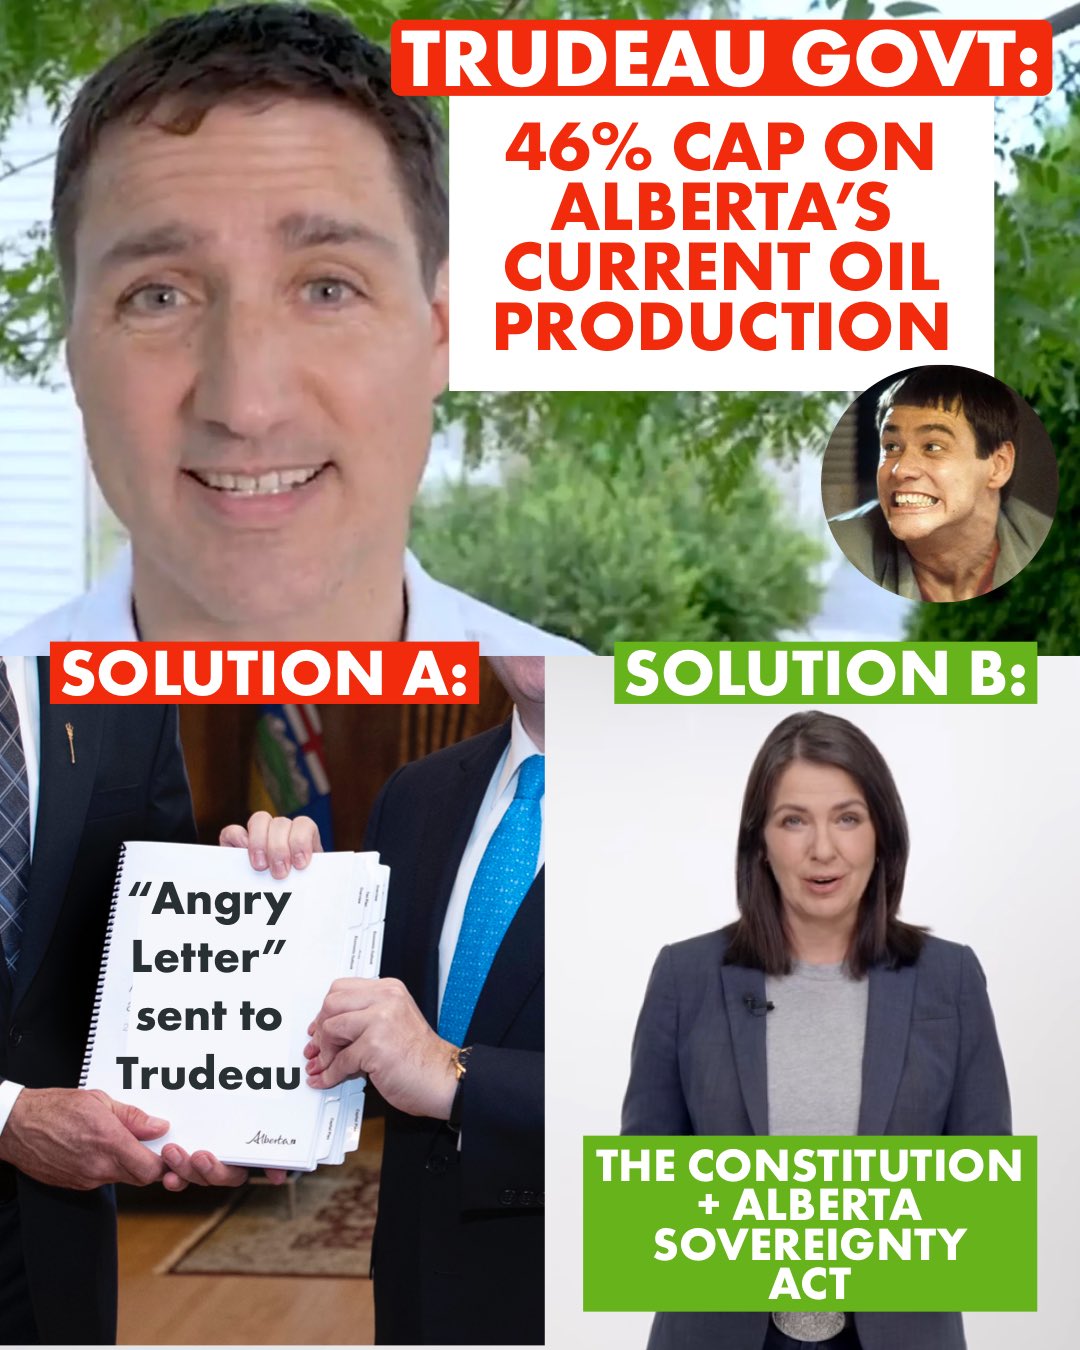 Alberta sovereignty act